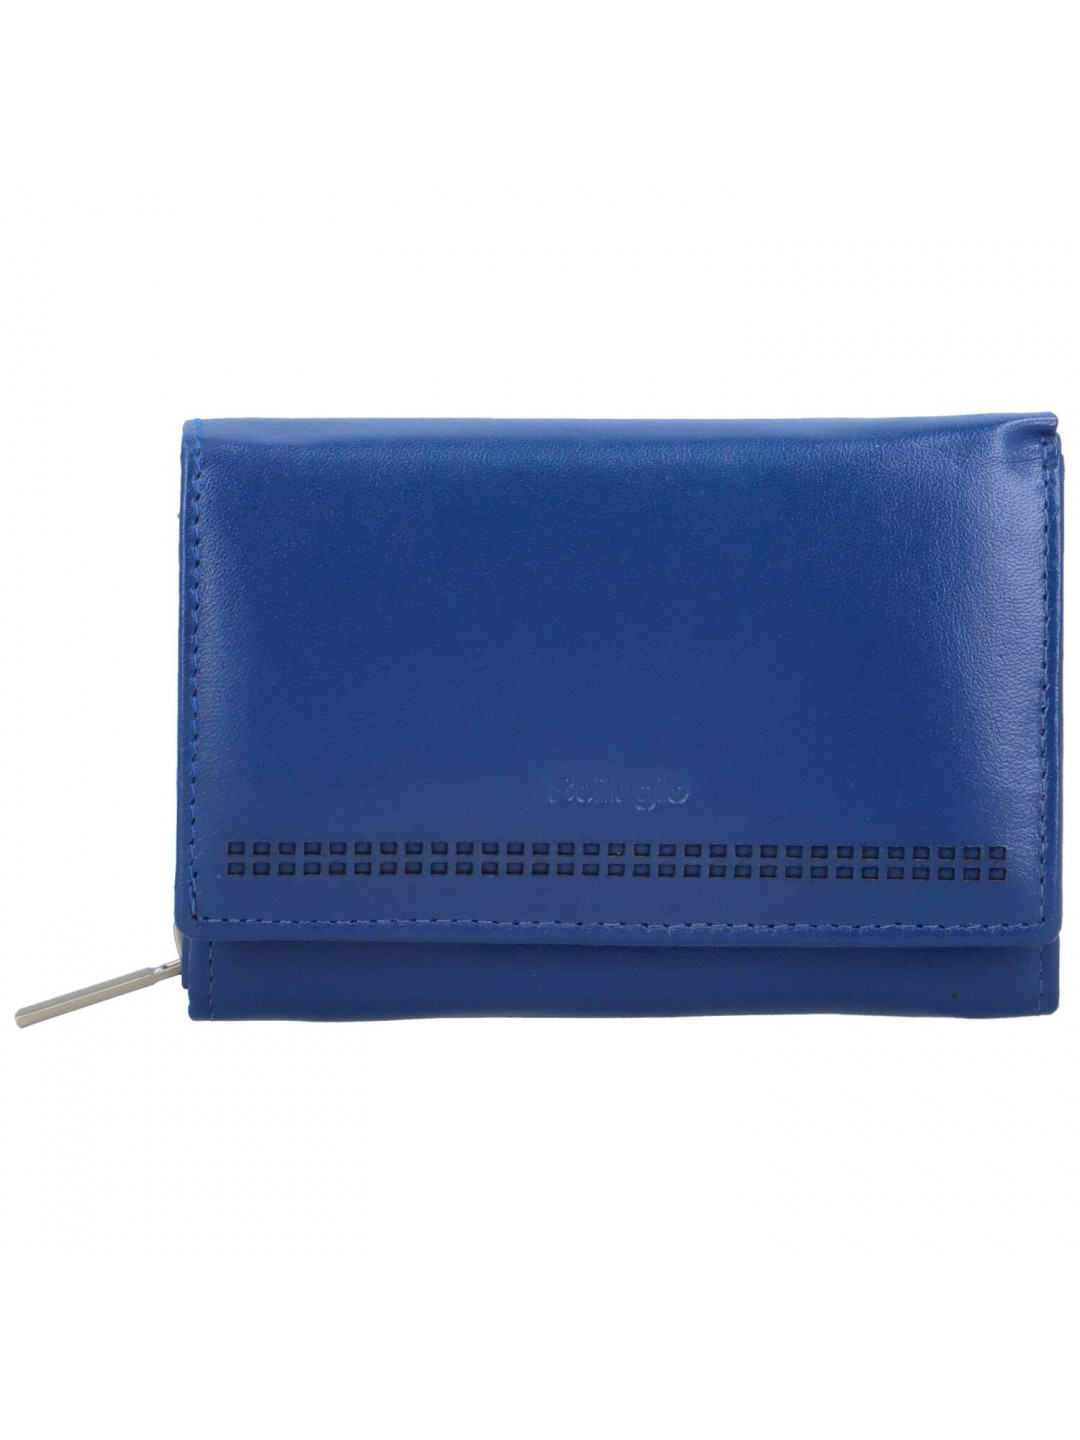 Dámská kožená malá peněženka Bellugio Gialla tmavě modrá